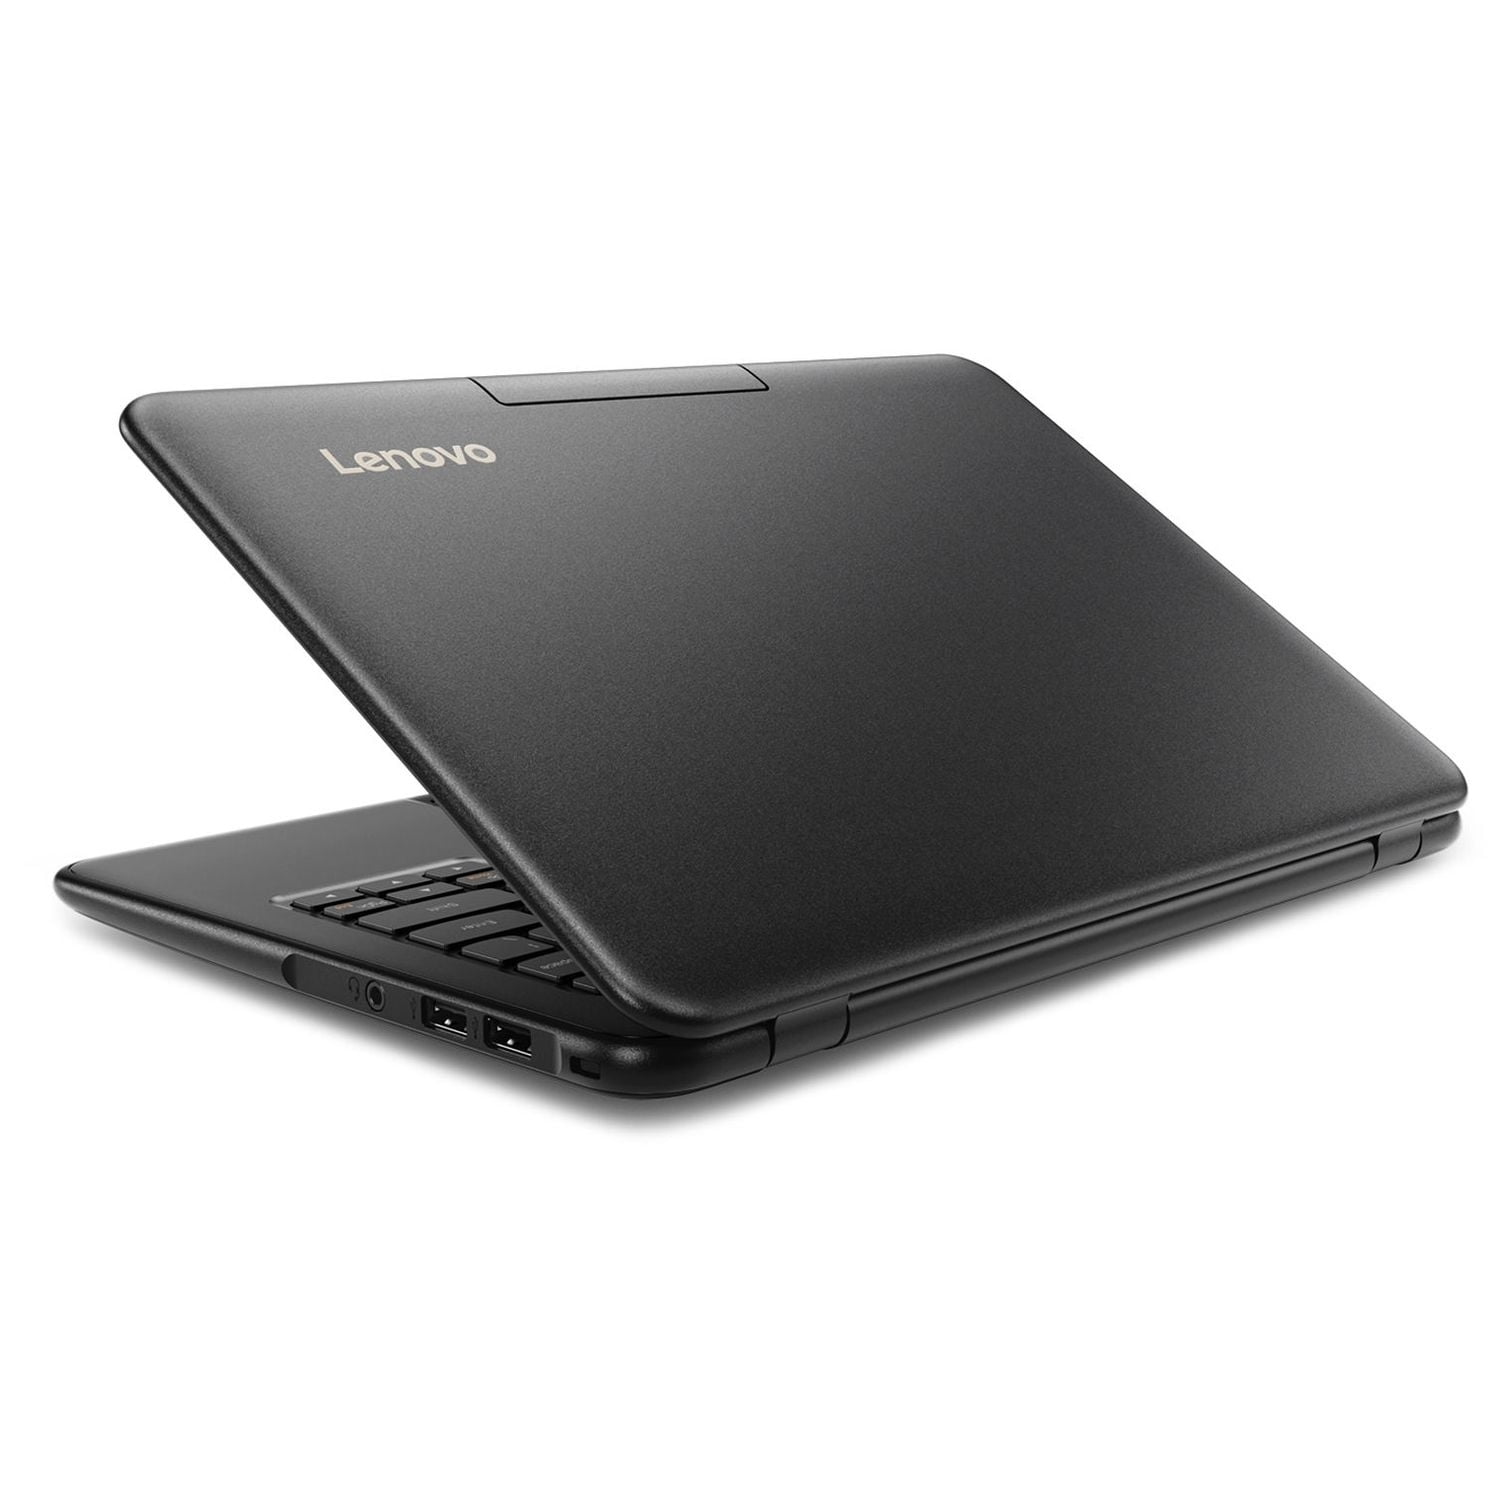 Lenovo 5096471 300e Intel Celeron N3450 1.1 GHz In Laptop, GB RAM, Windows  10 Pro,Black Chromebook